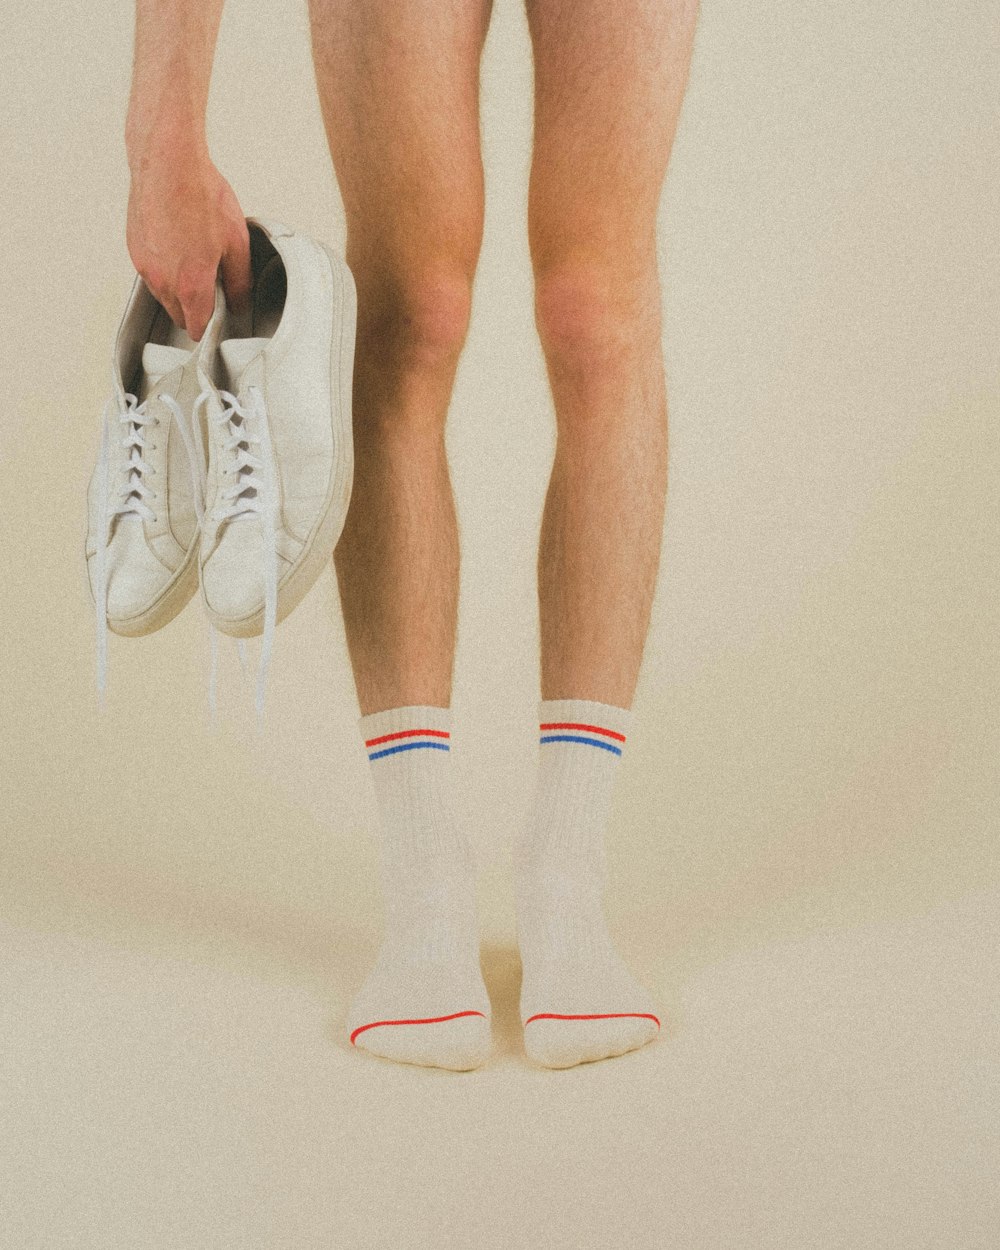 person wearing white nike socks and white nike sneakers photo – Free Grey  Image on Unsplash